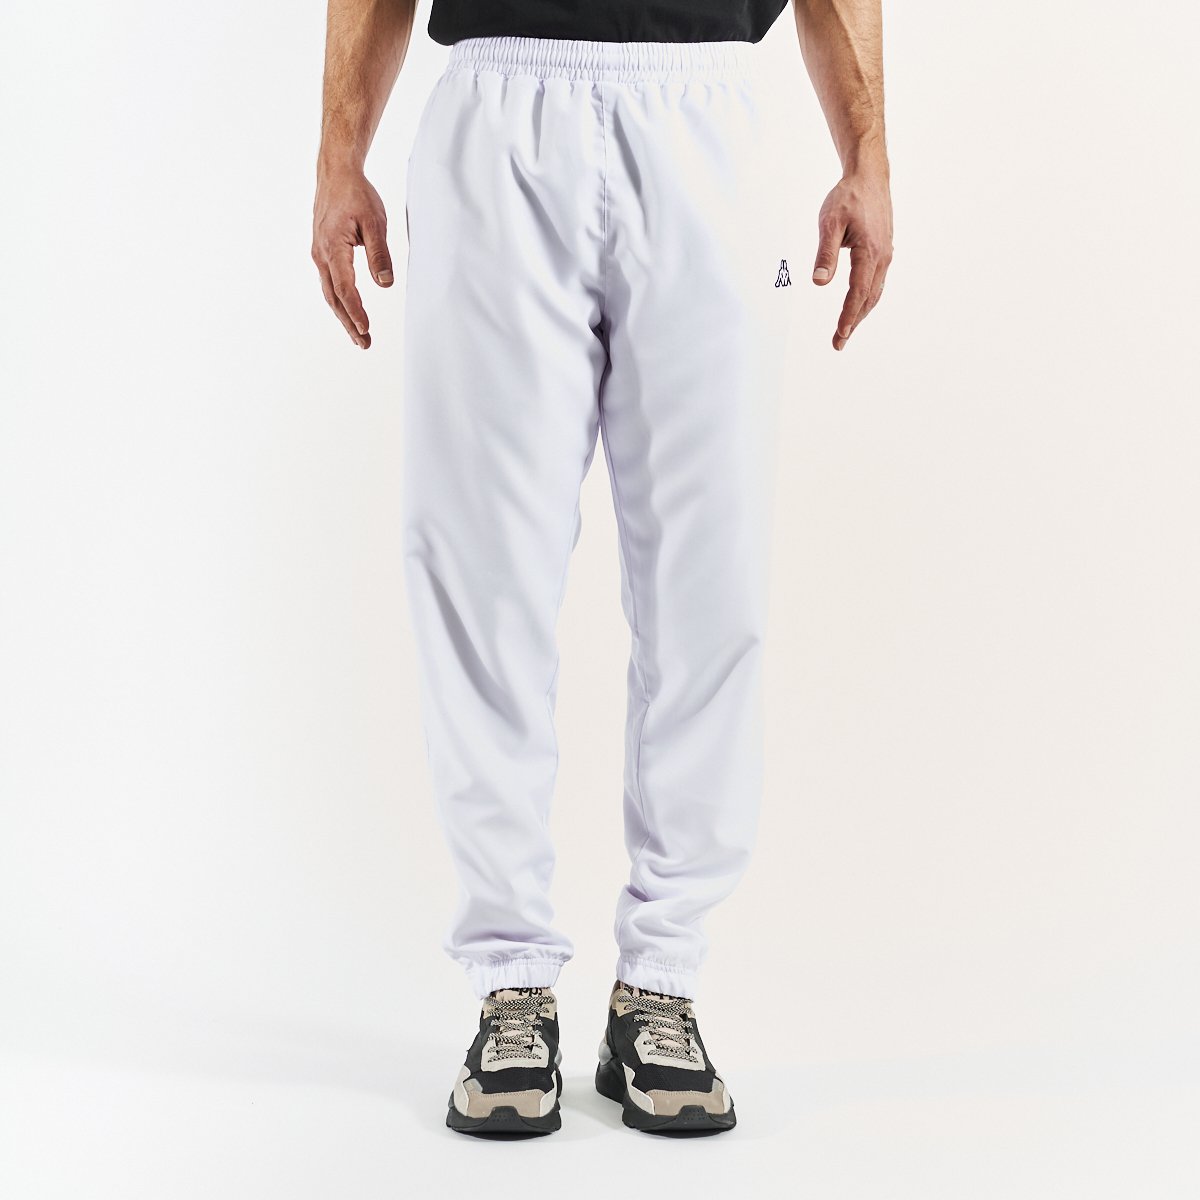 Pantalón Krismano blanco hombre - Imagen 1